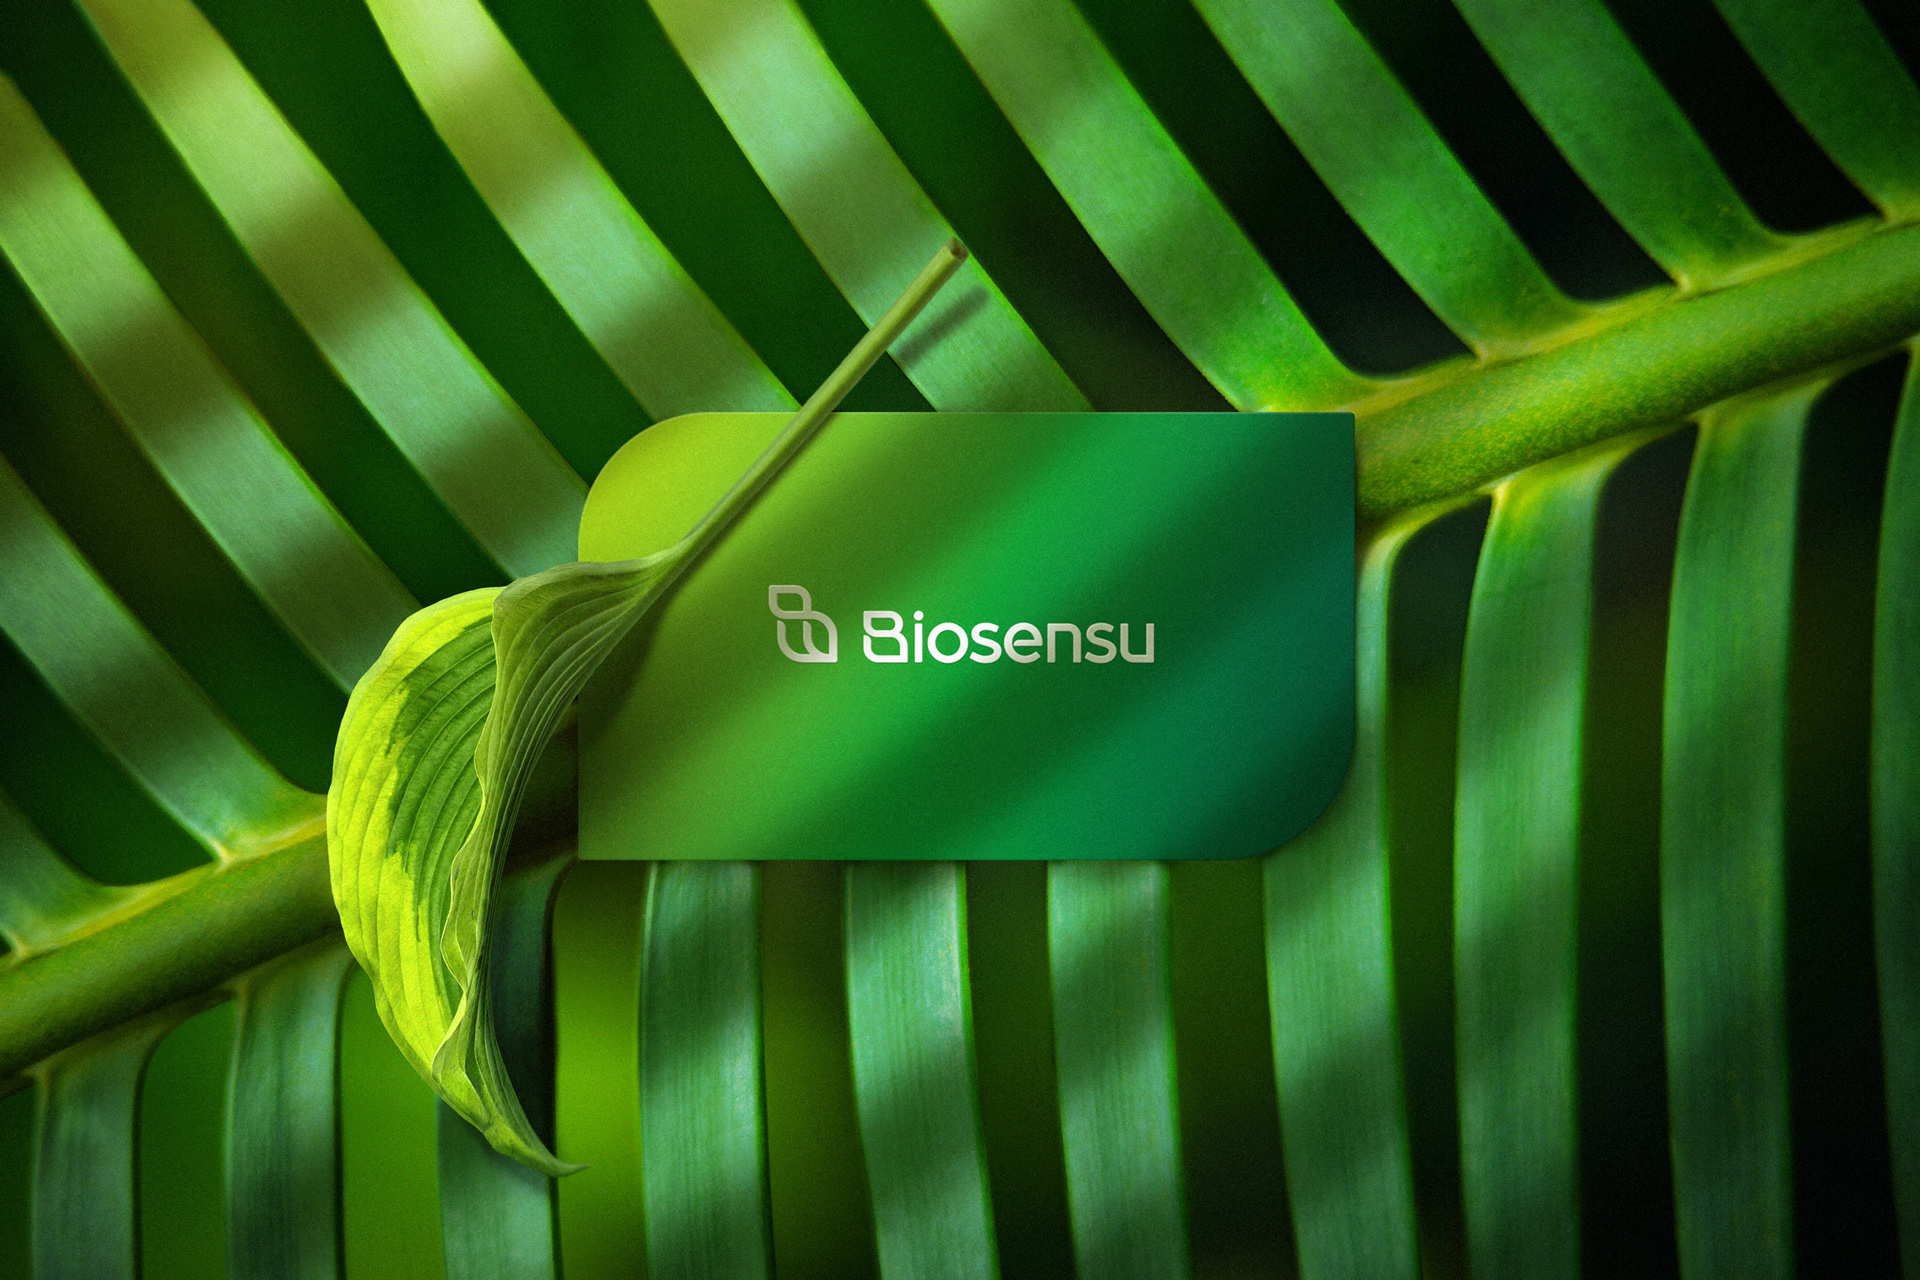 Brand Identity for Biosensu Designed by Lucas Coradi